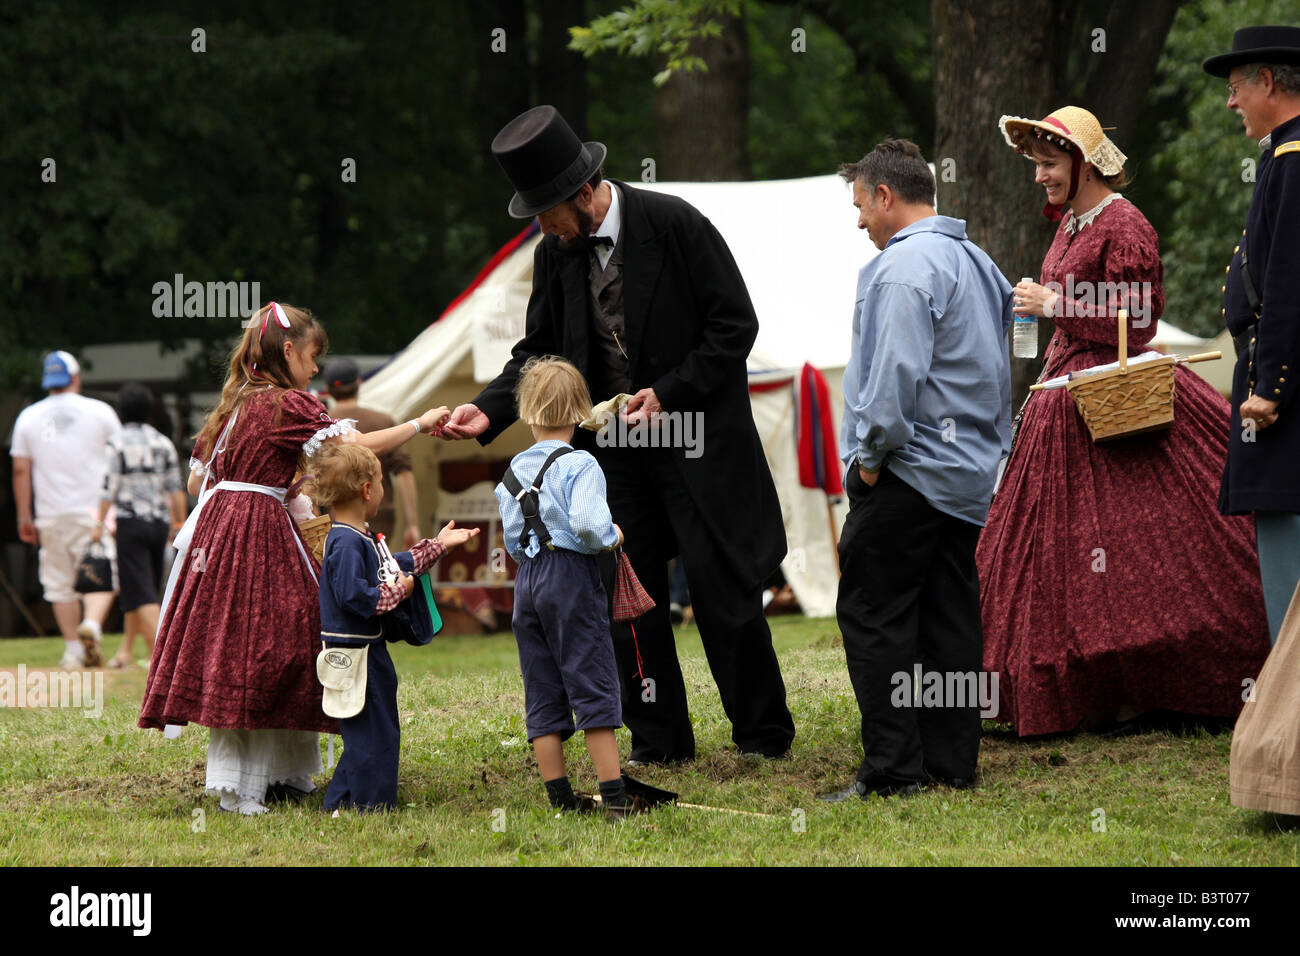 President Abraham Lincoln handing coins to children at a Civil War Encampment Reenactment Stock Photo